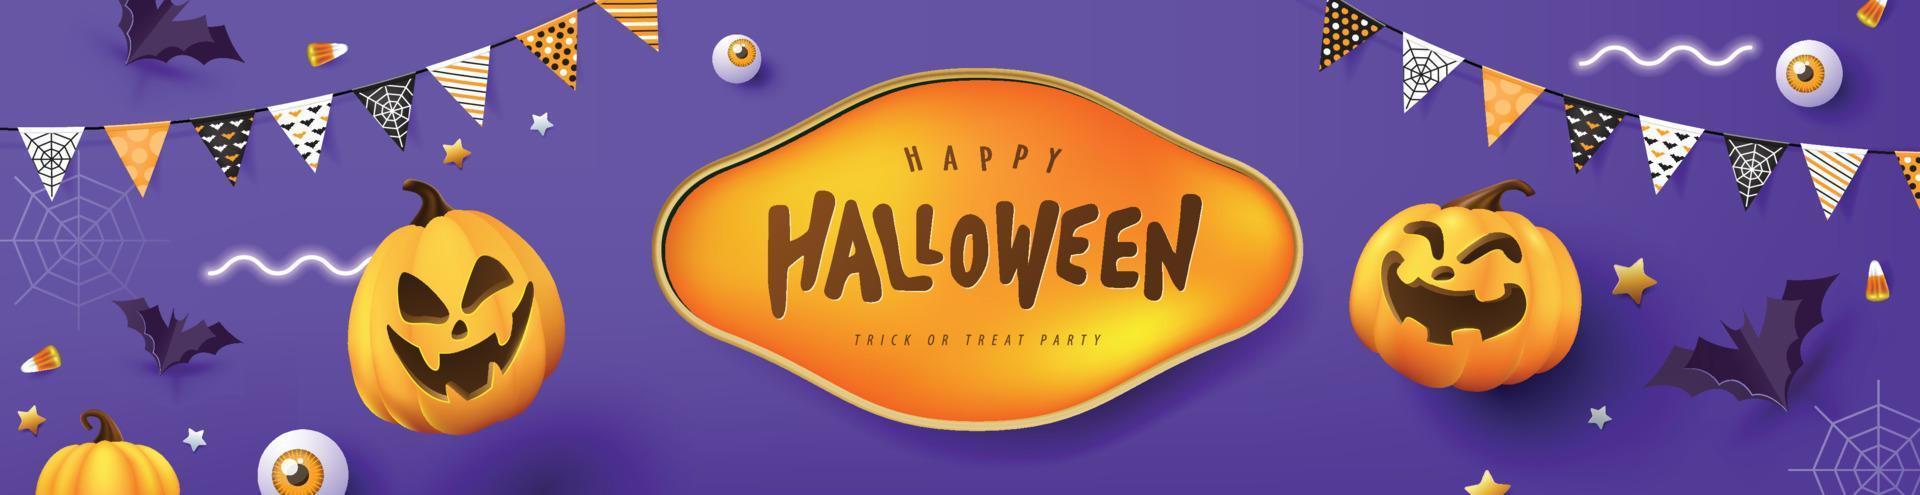 Halloween banner design with pumpkins Festive Elements Halloween vector